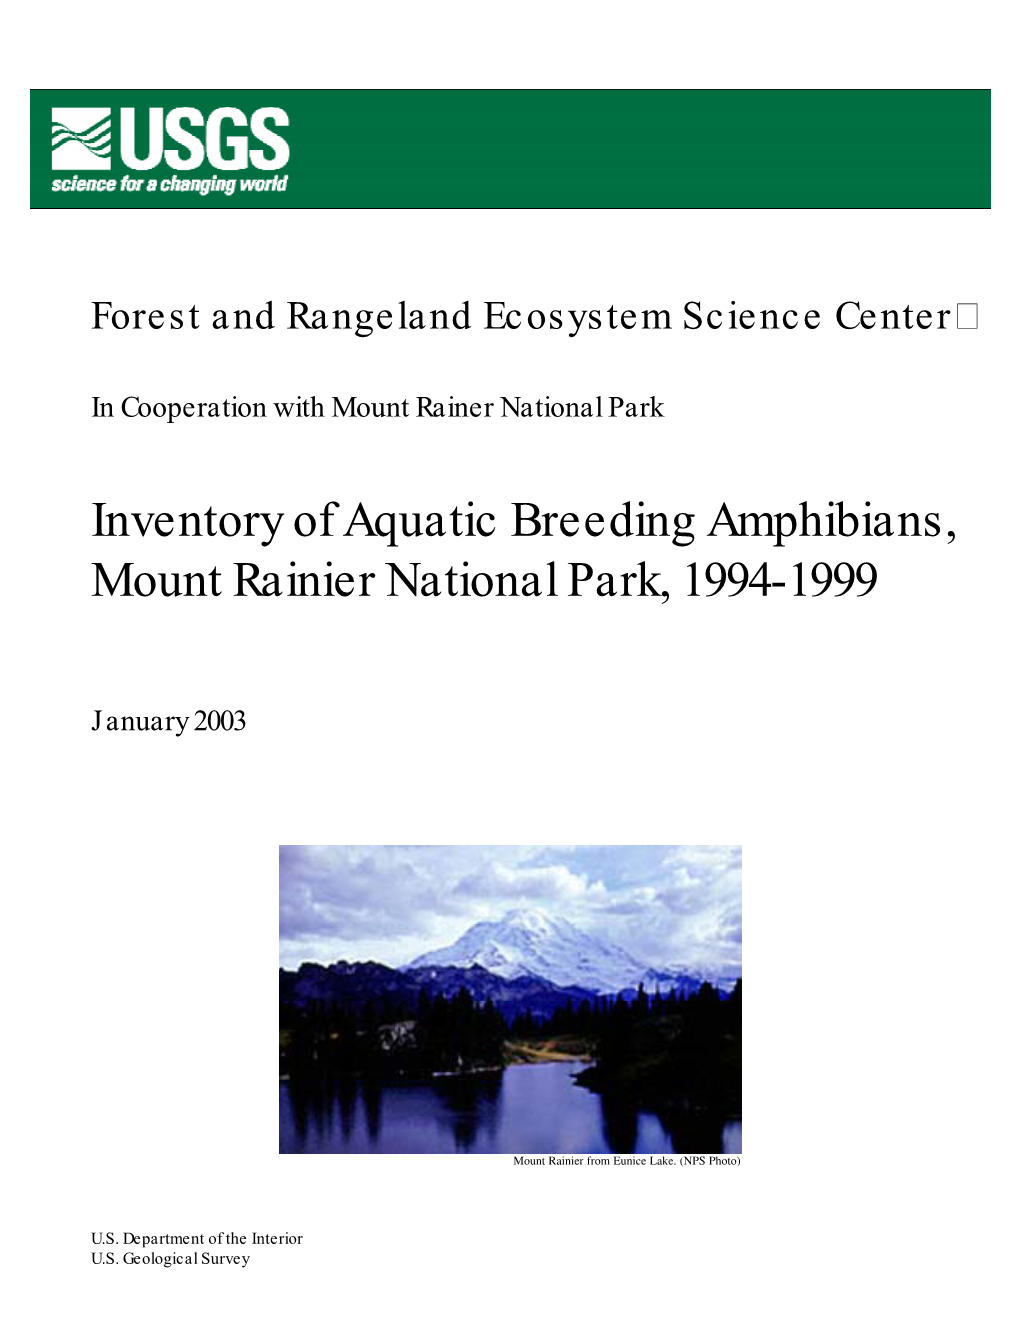 Inventory of Aquatic Breeding Amphibians, Mount Rainier National Park, 1994-1999